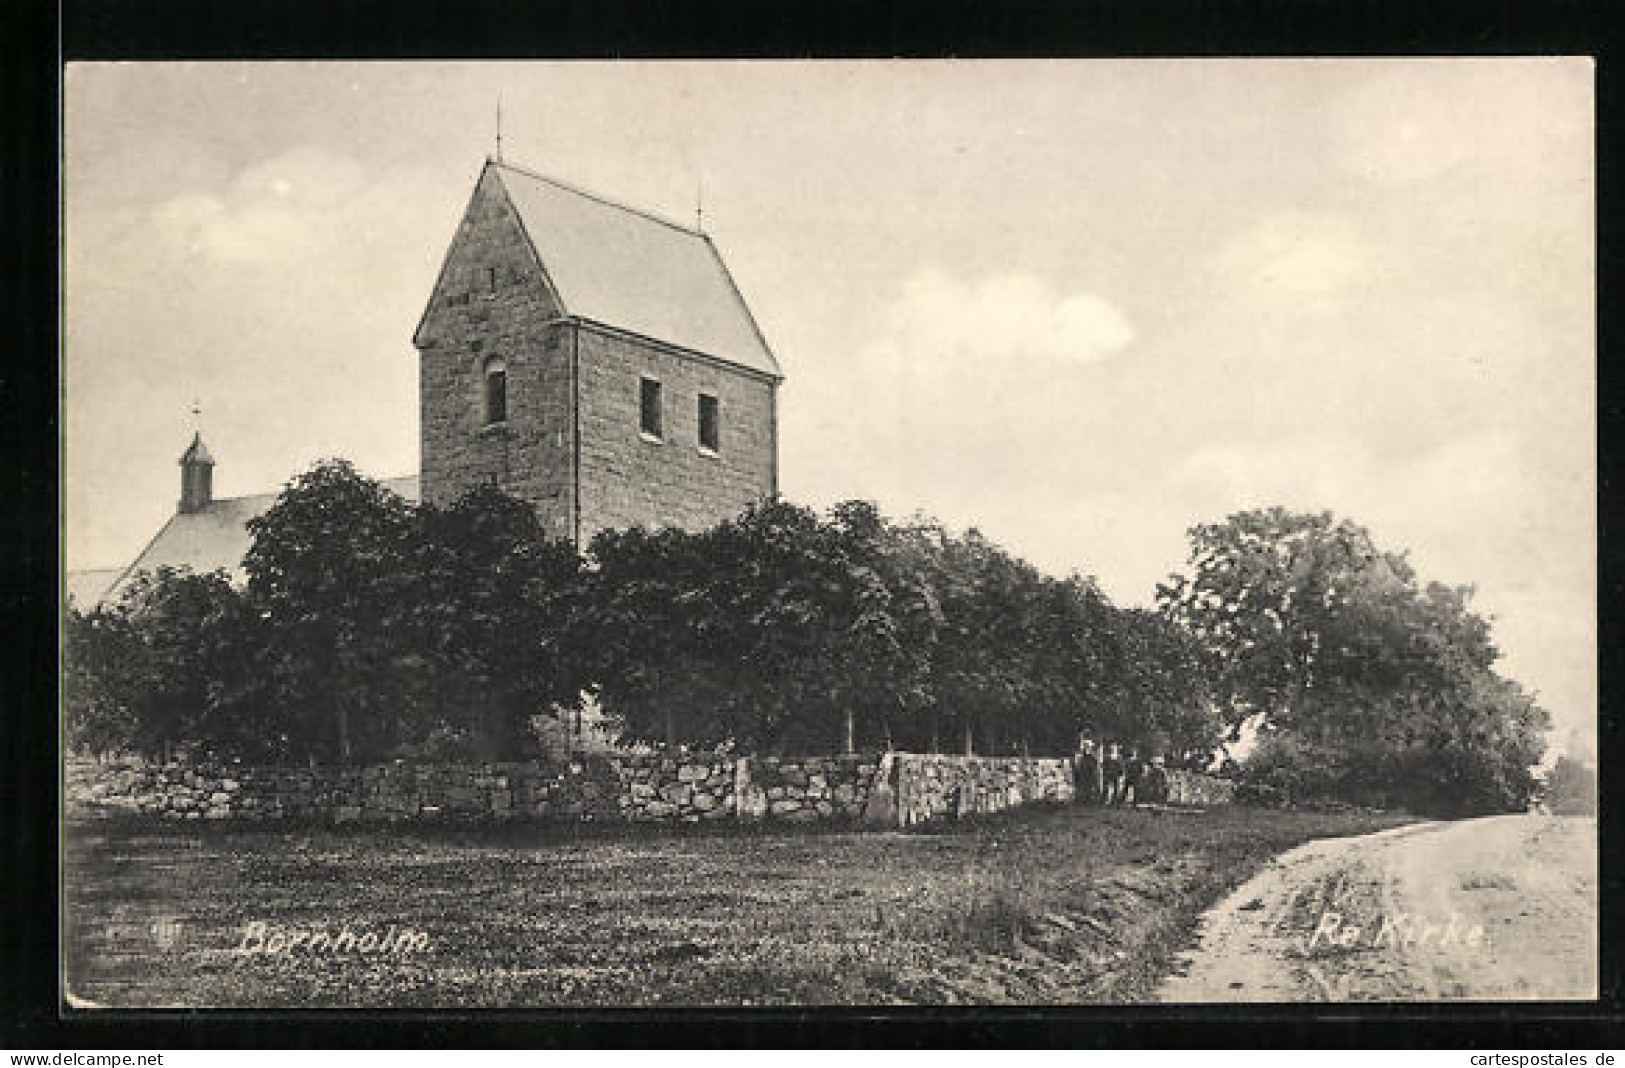 AK Bornholm, Ro Kirke  - Denmark